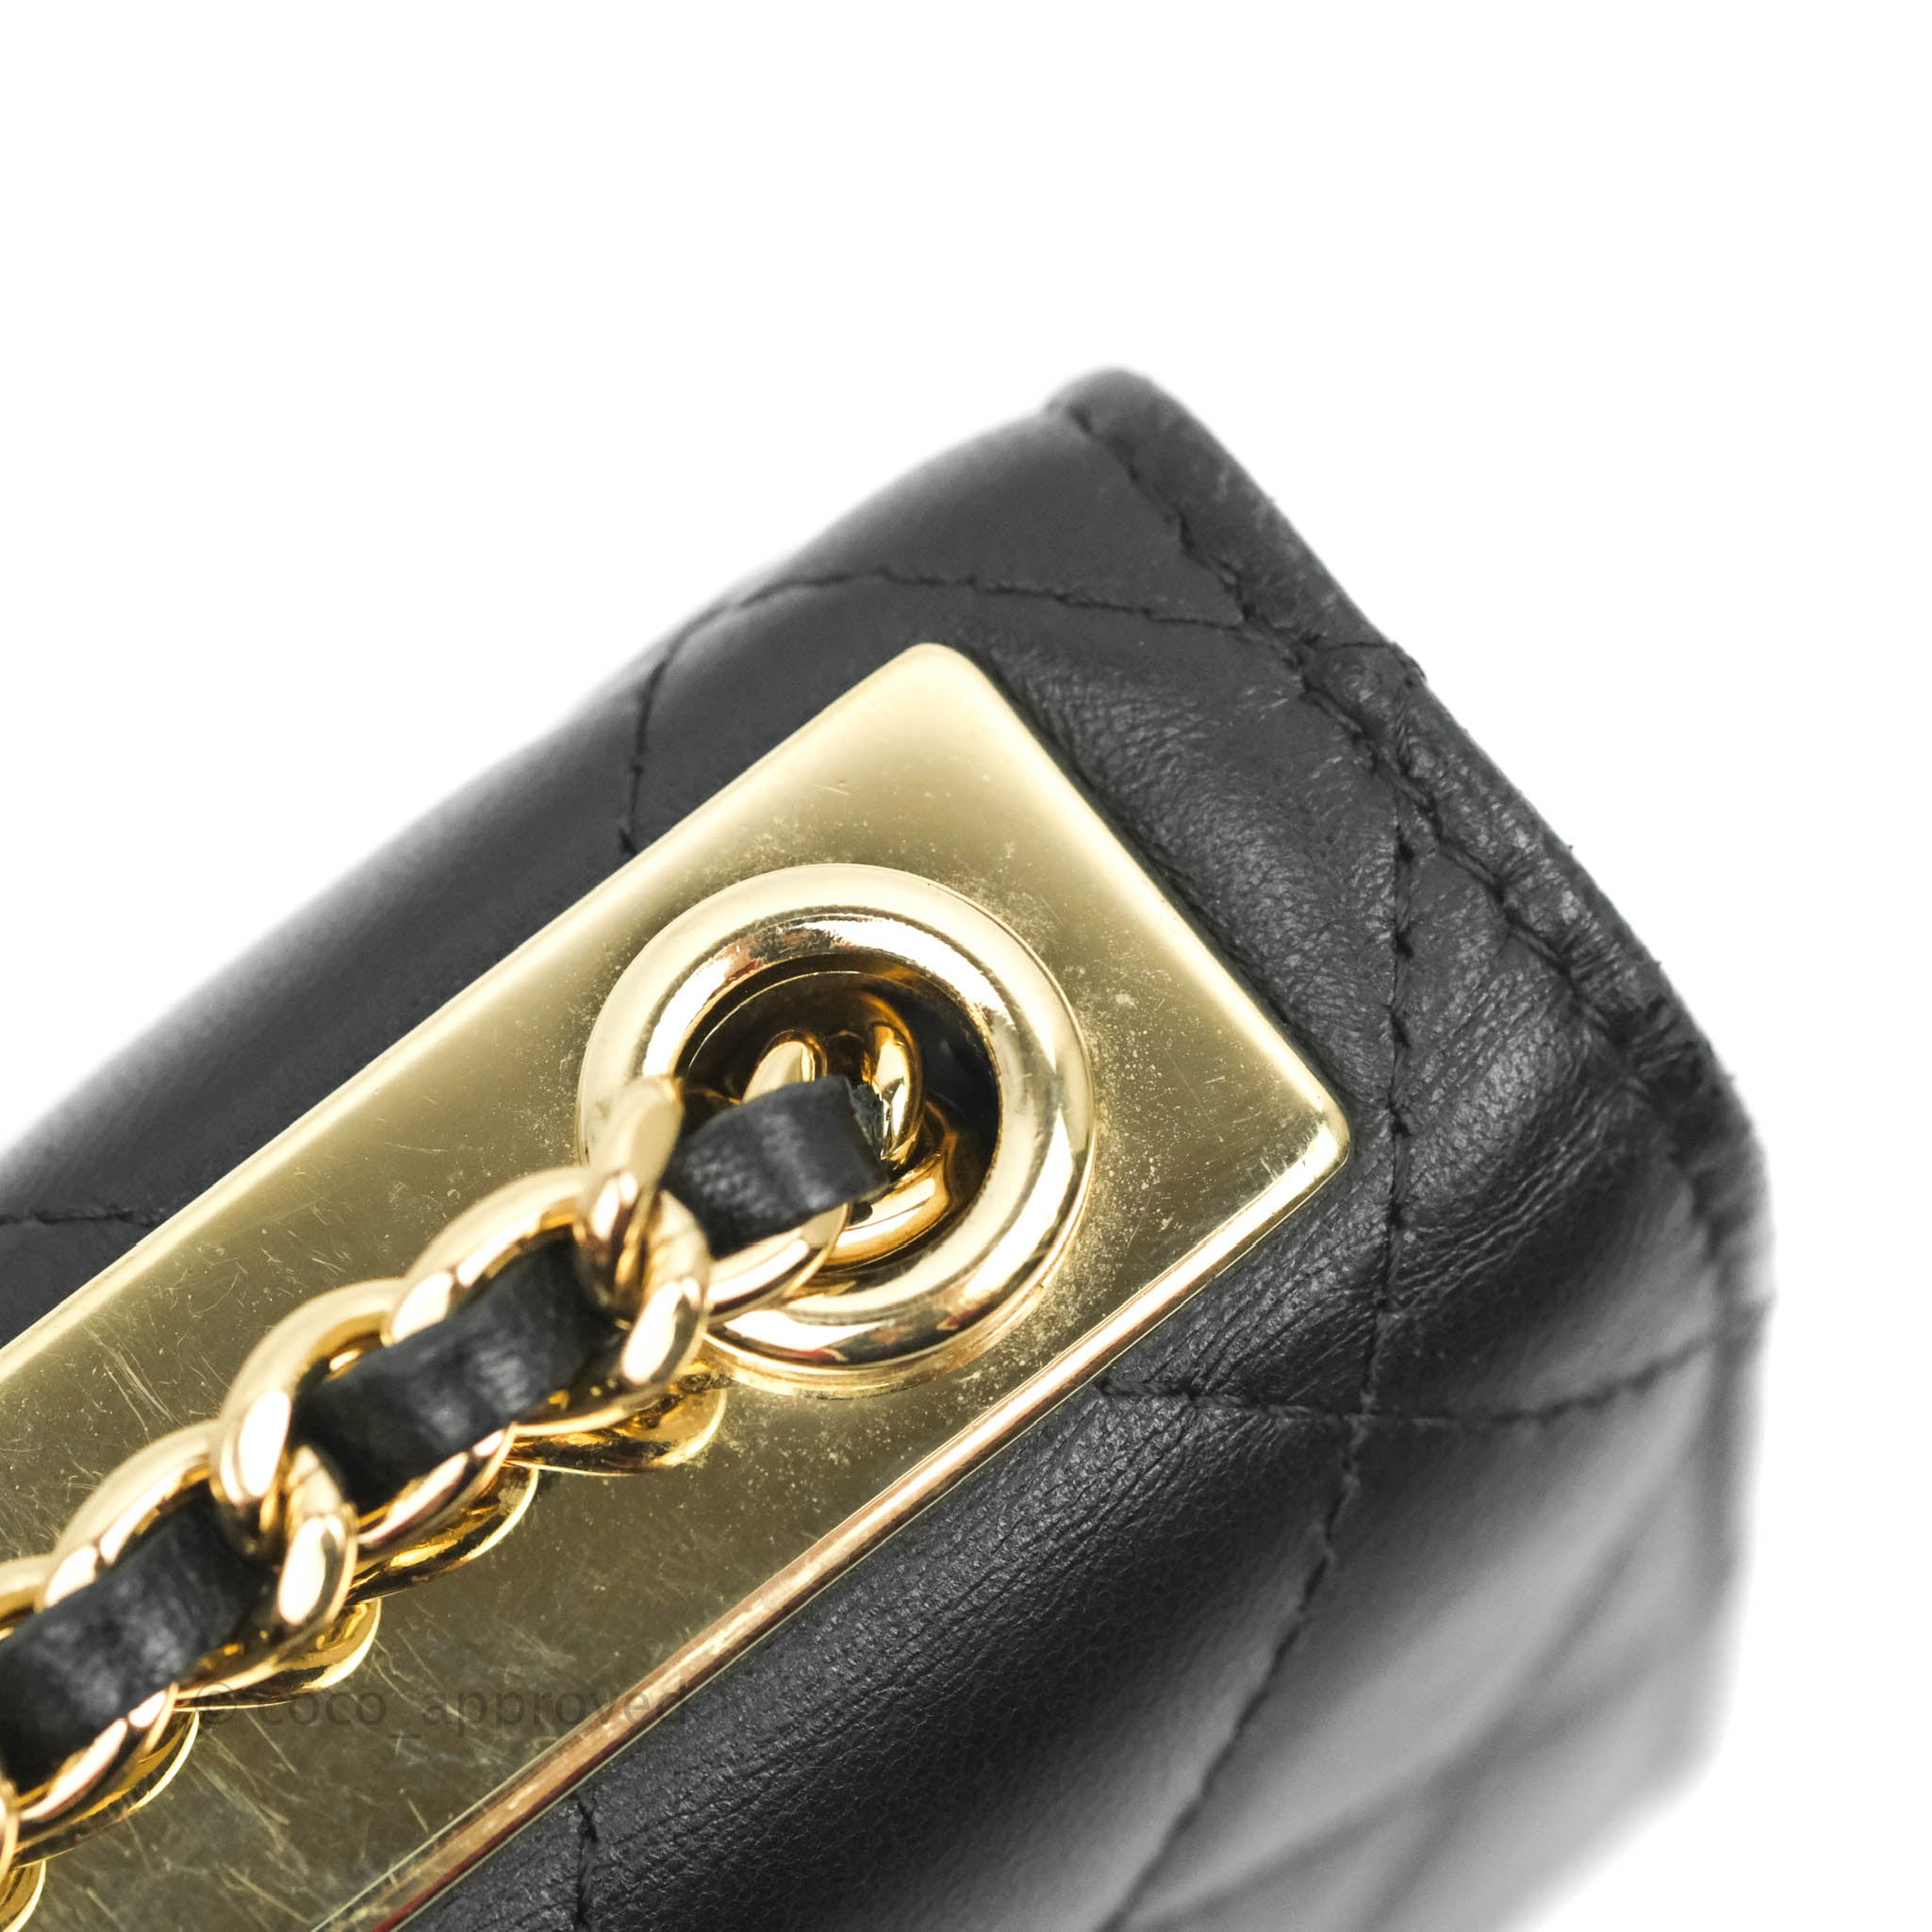 Trendy CC Wallet on Chain leather handbag